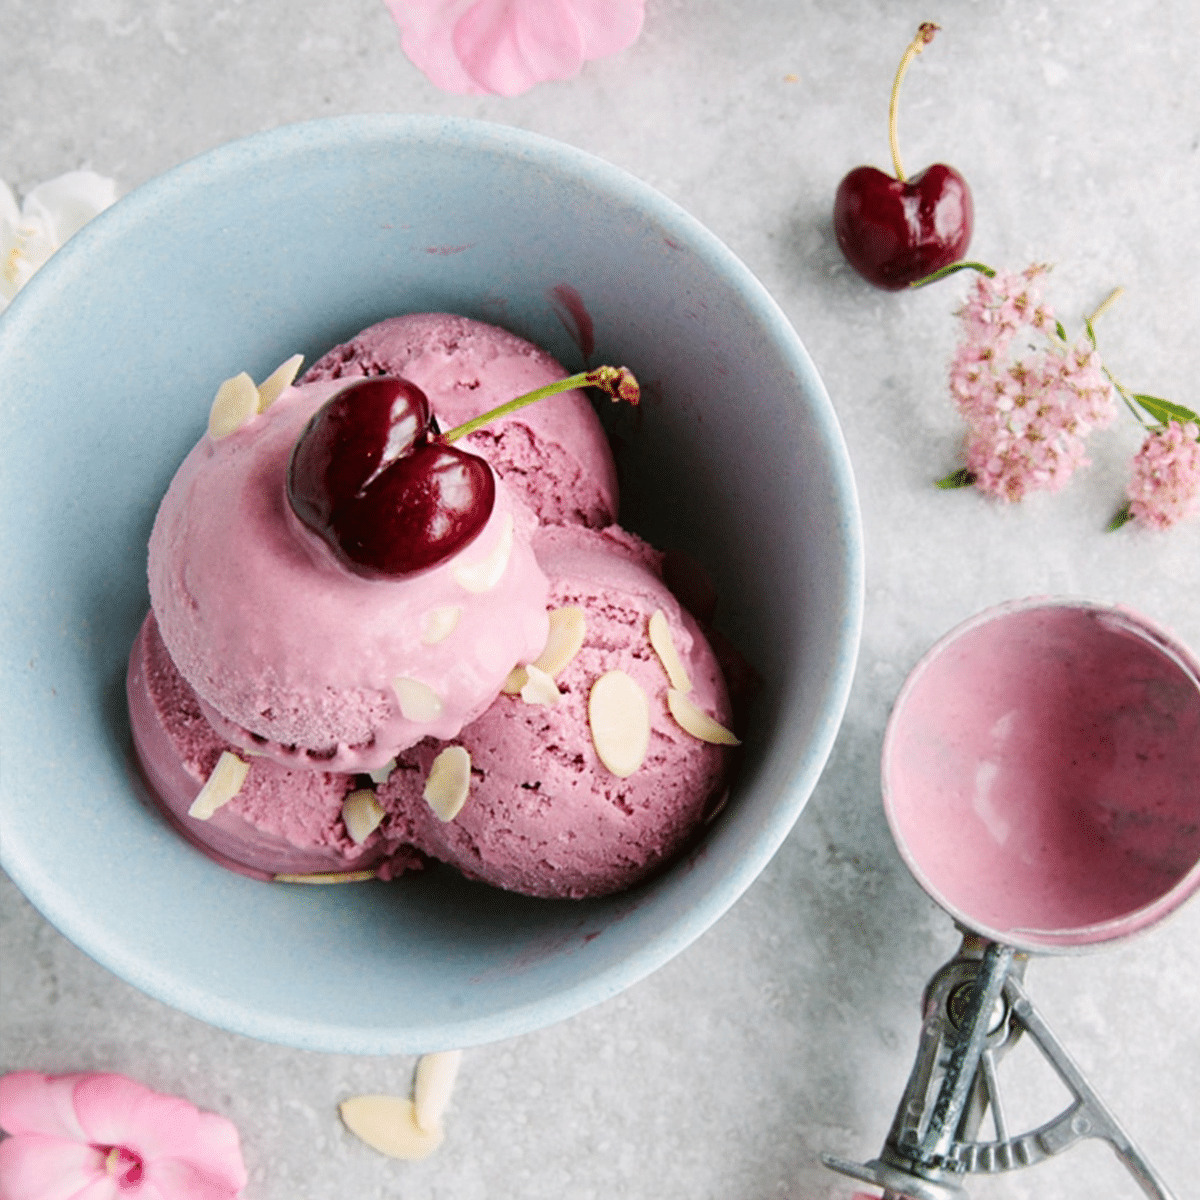 Vegan Cherry Bakewell Ice Cream with cherries and almonds